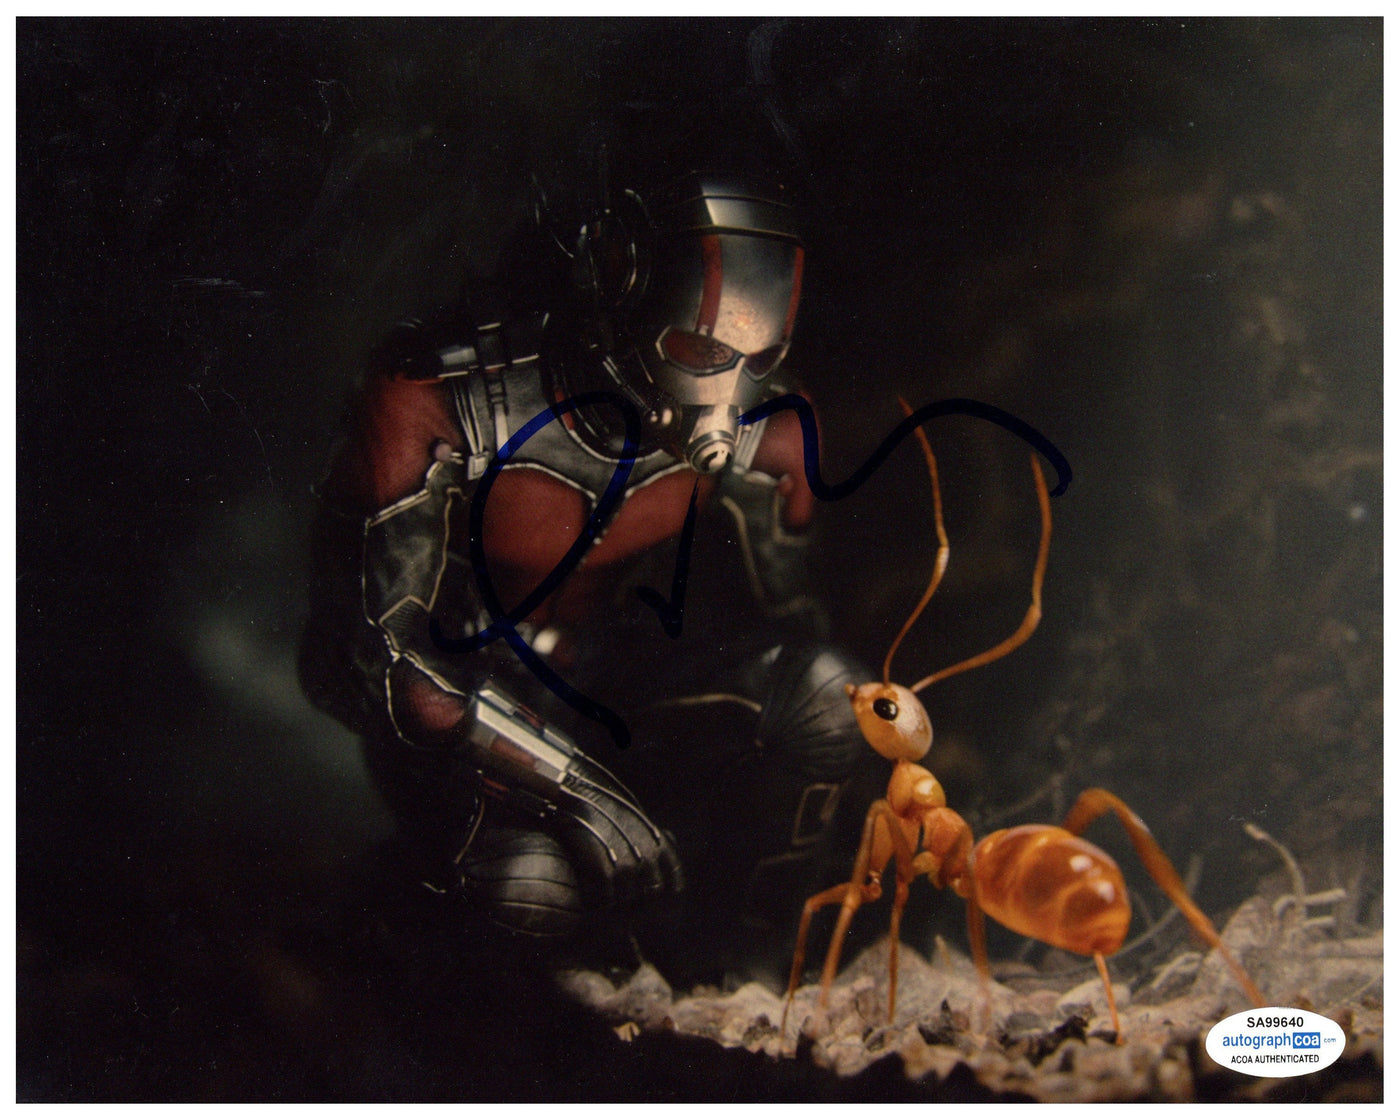 Paul Rudd Signed 8x10 Photo Marvel Ant-Man Autographed ACOA #2